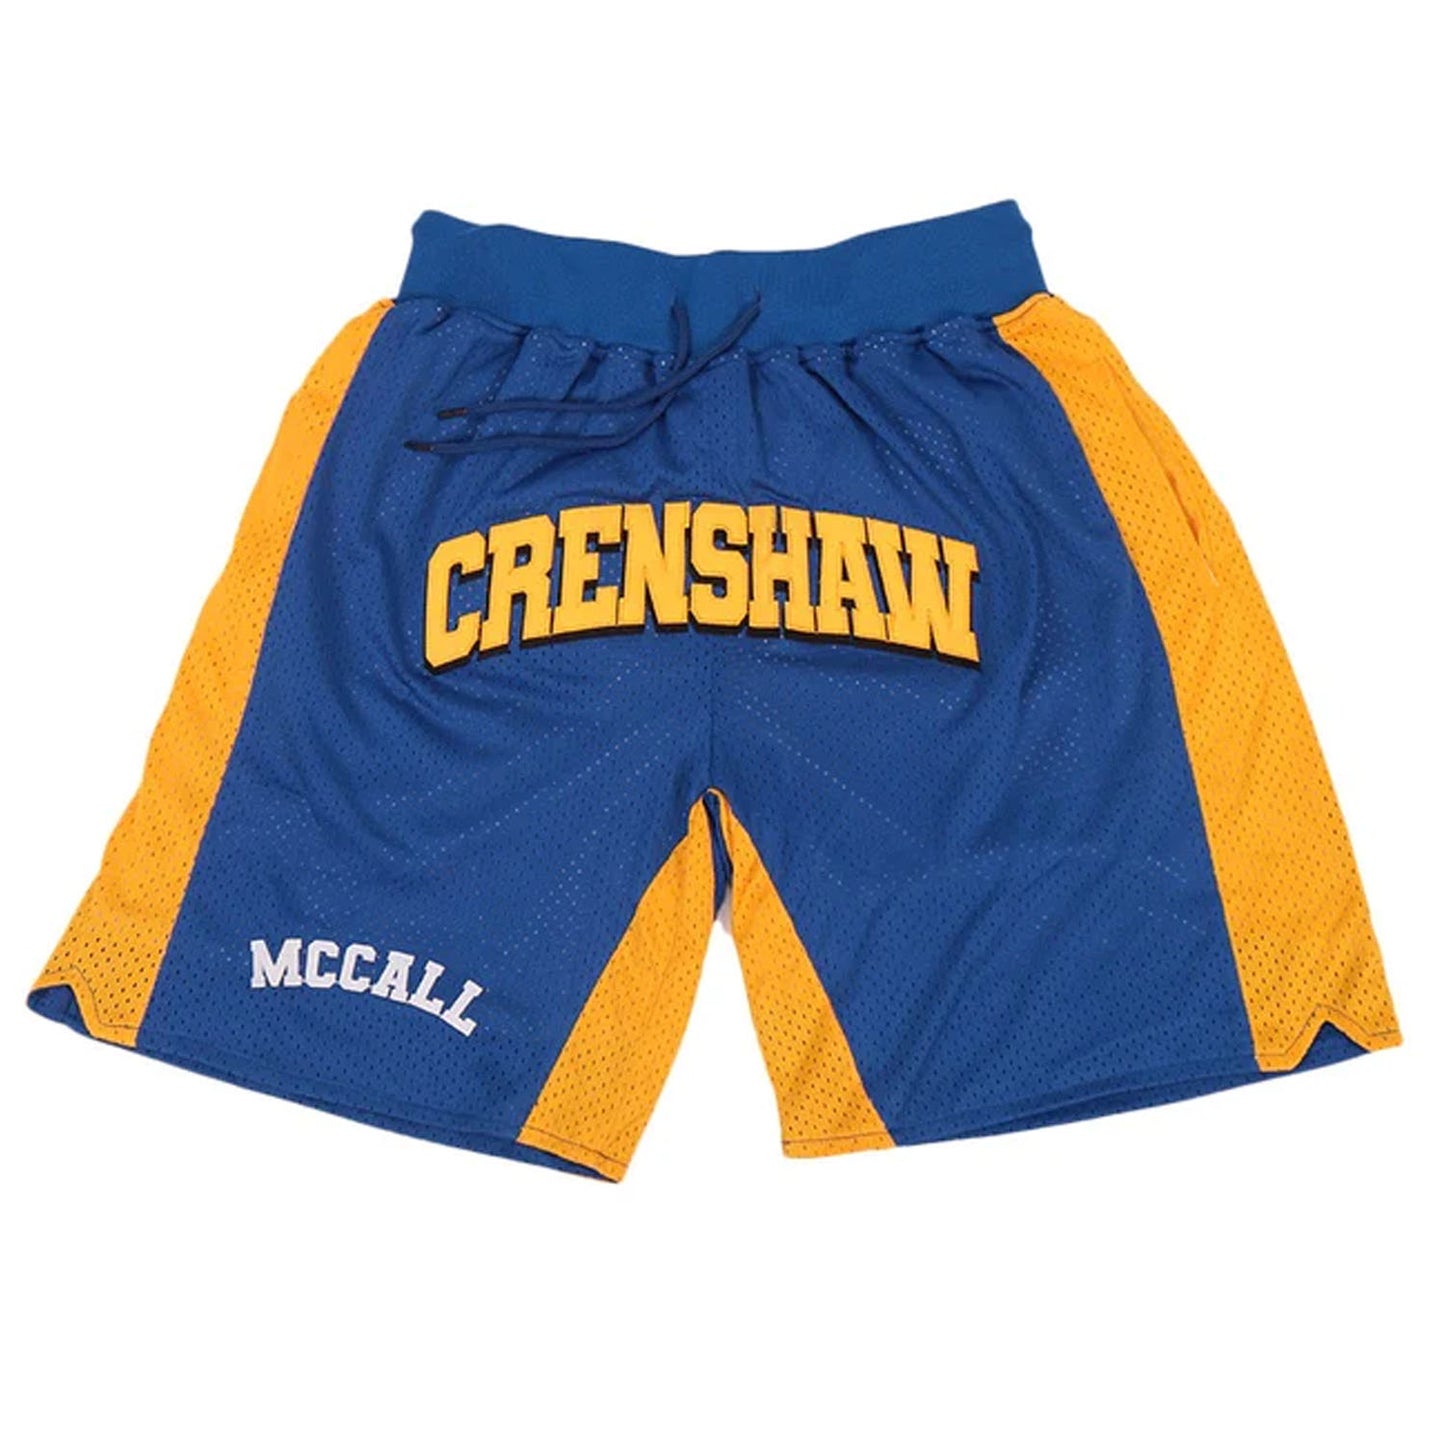 Quincy McCall Love & Basketball Crenshaw Basketball Shorts